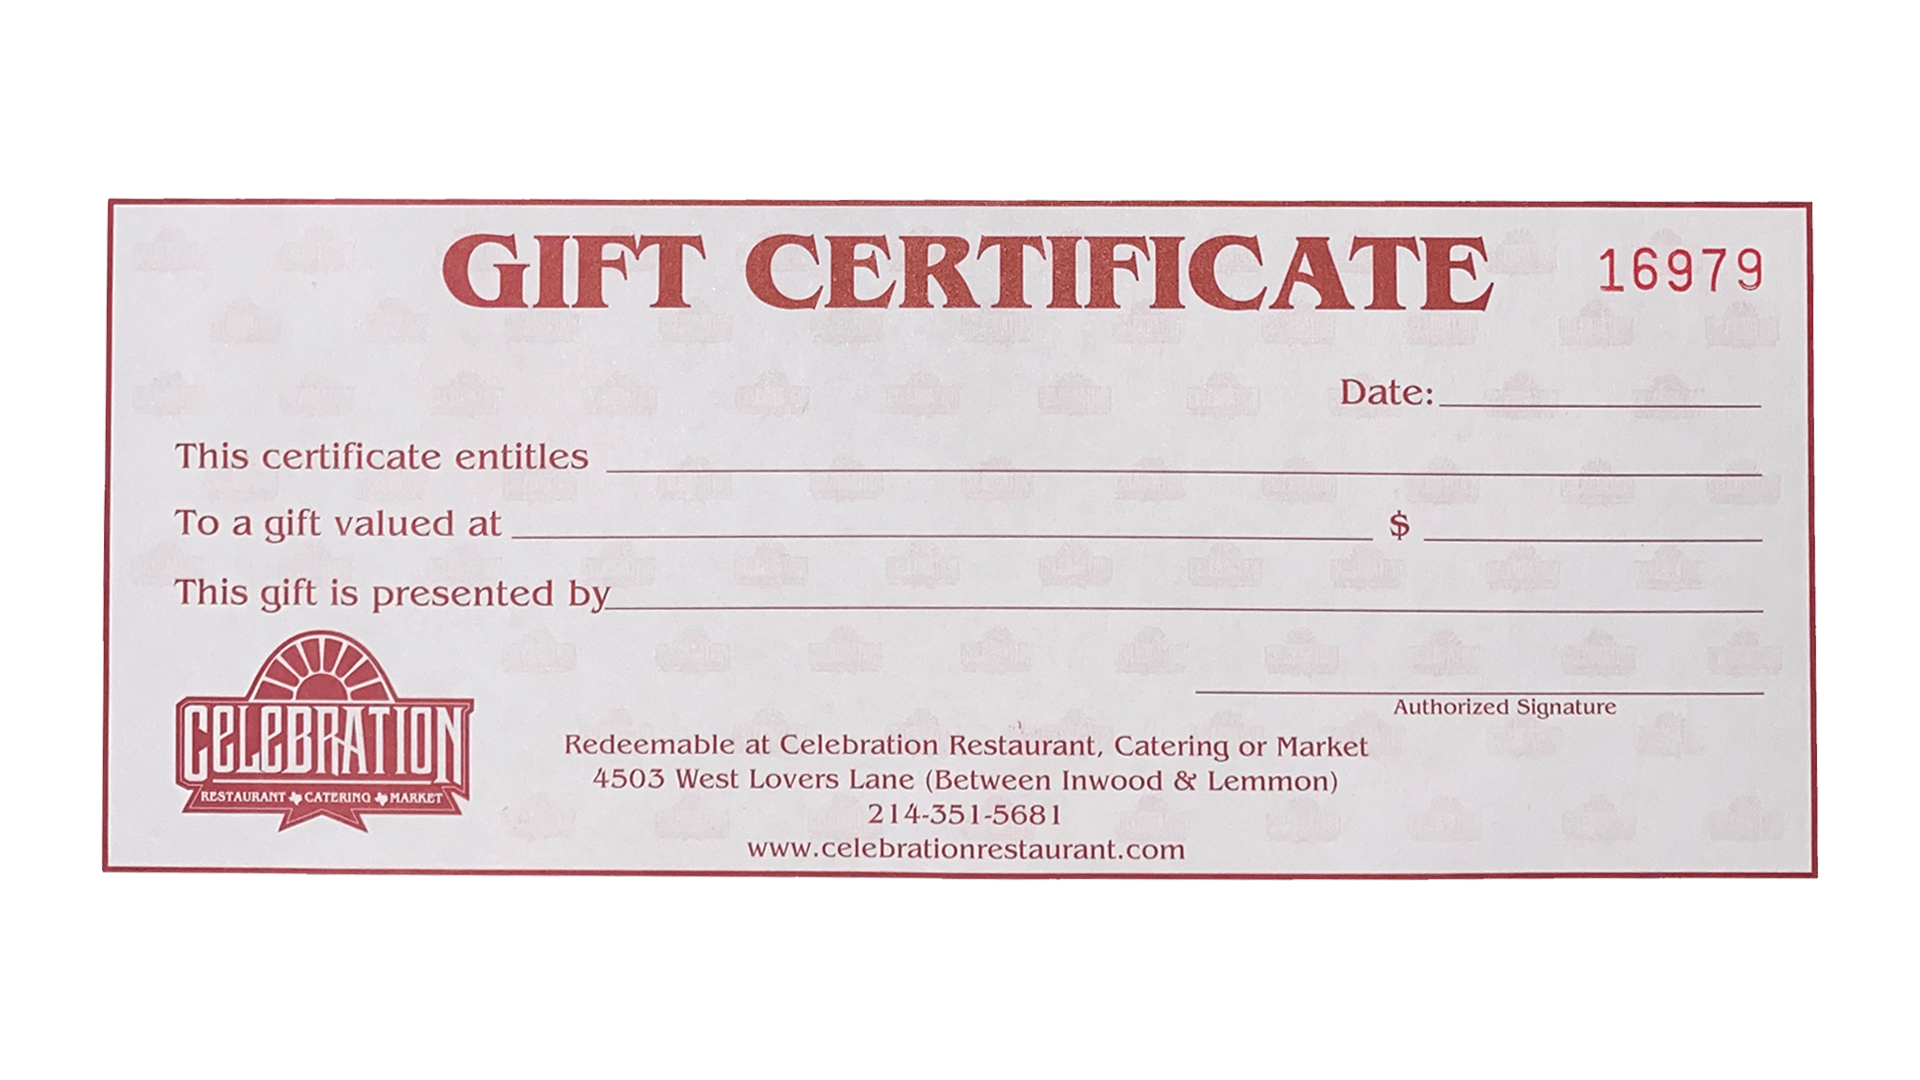 https://celebrationrestaurant.com/wp-content/uploads/2021/08/Gift-Certificate.png